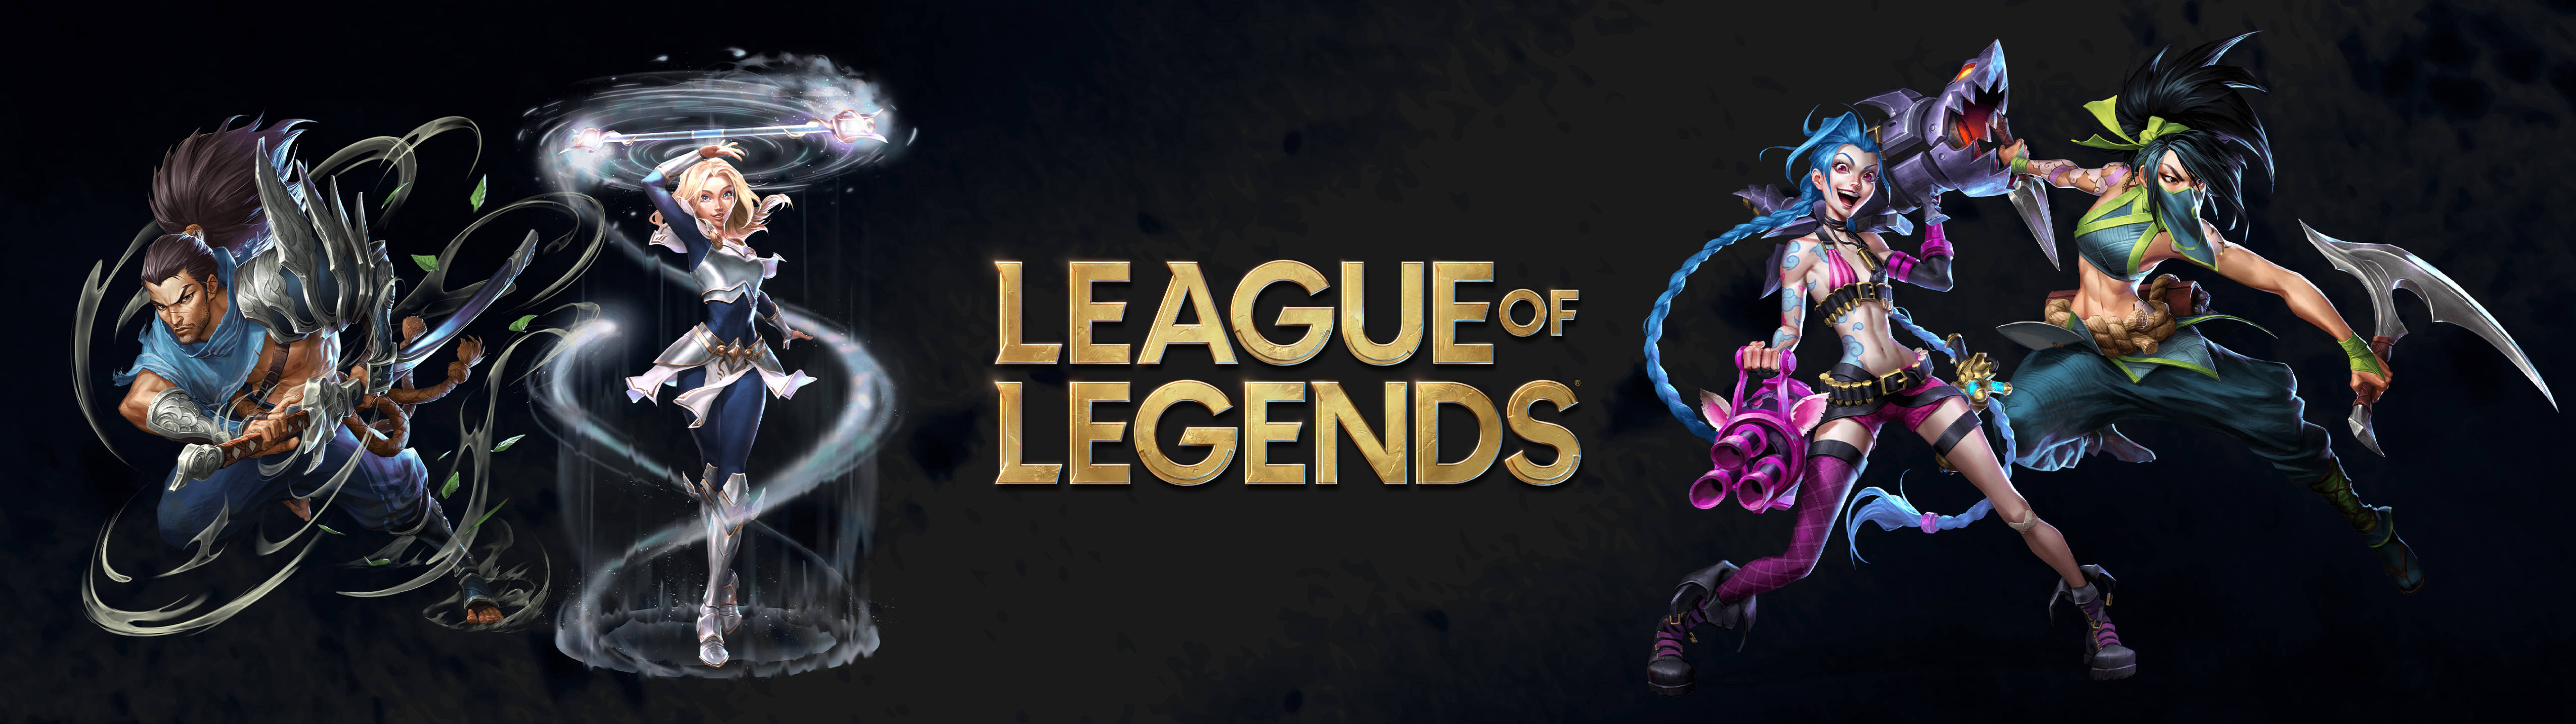 League Of Legends 5120x1440 Gaming Wallpaper